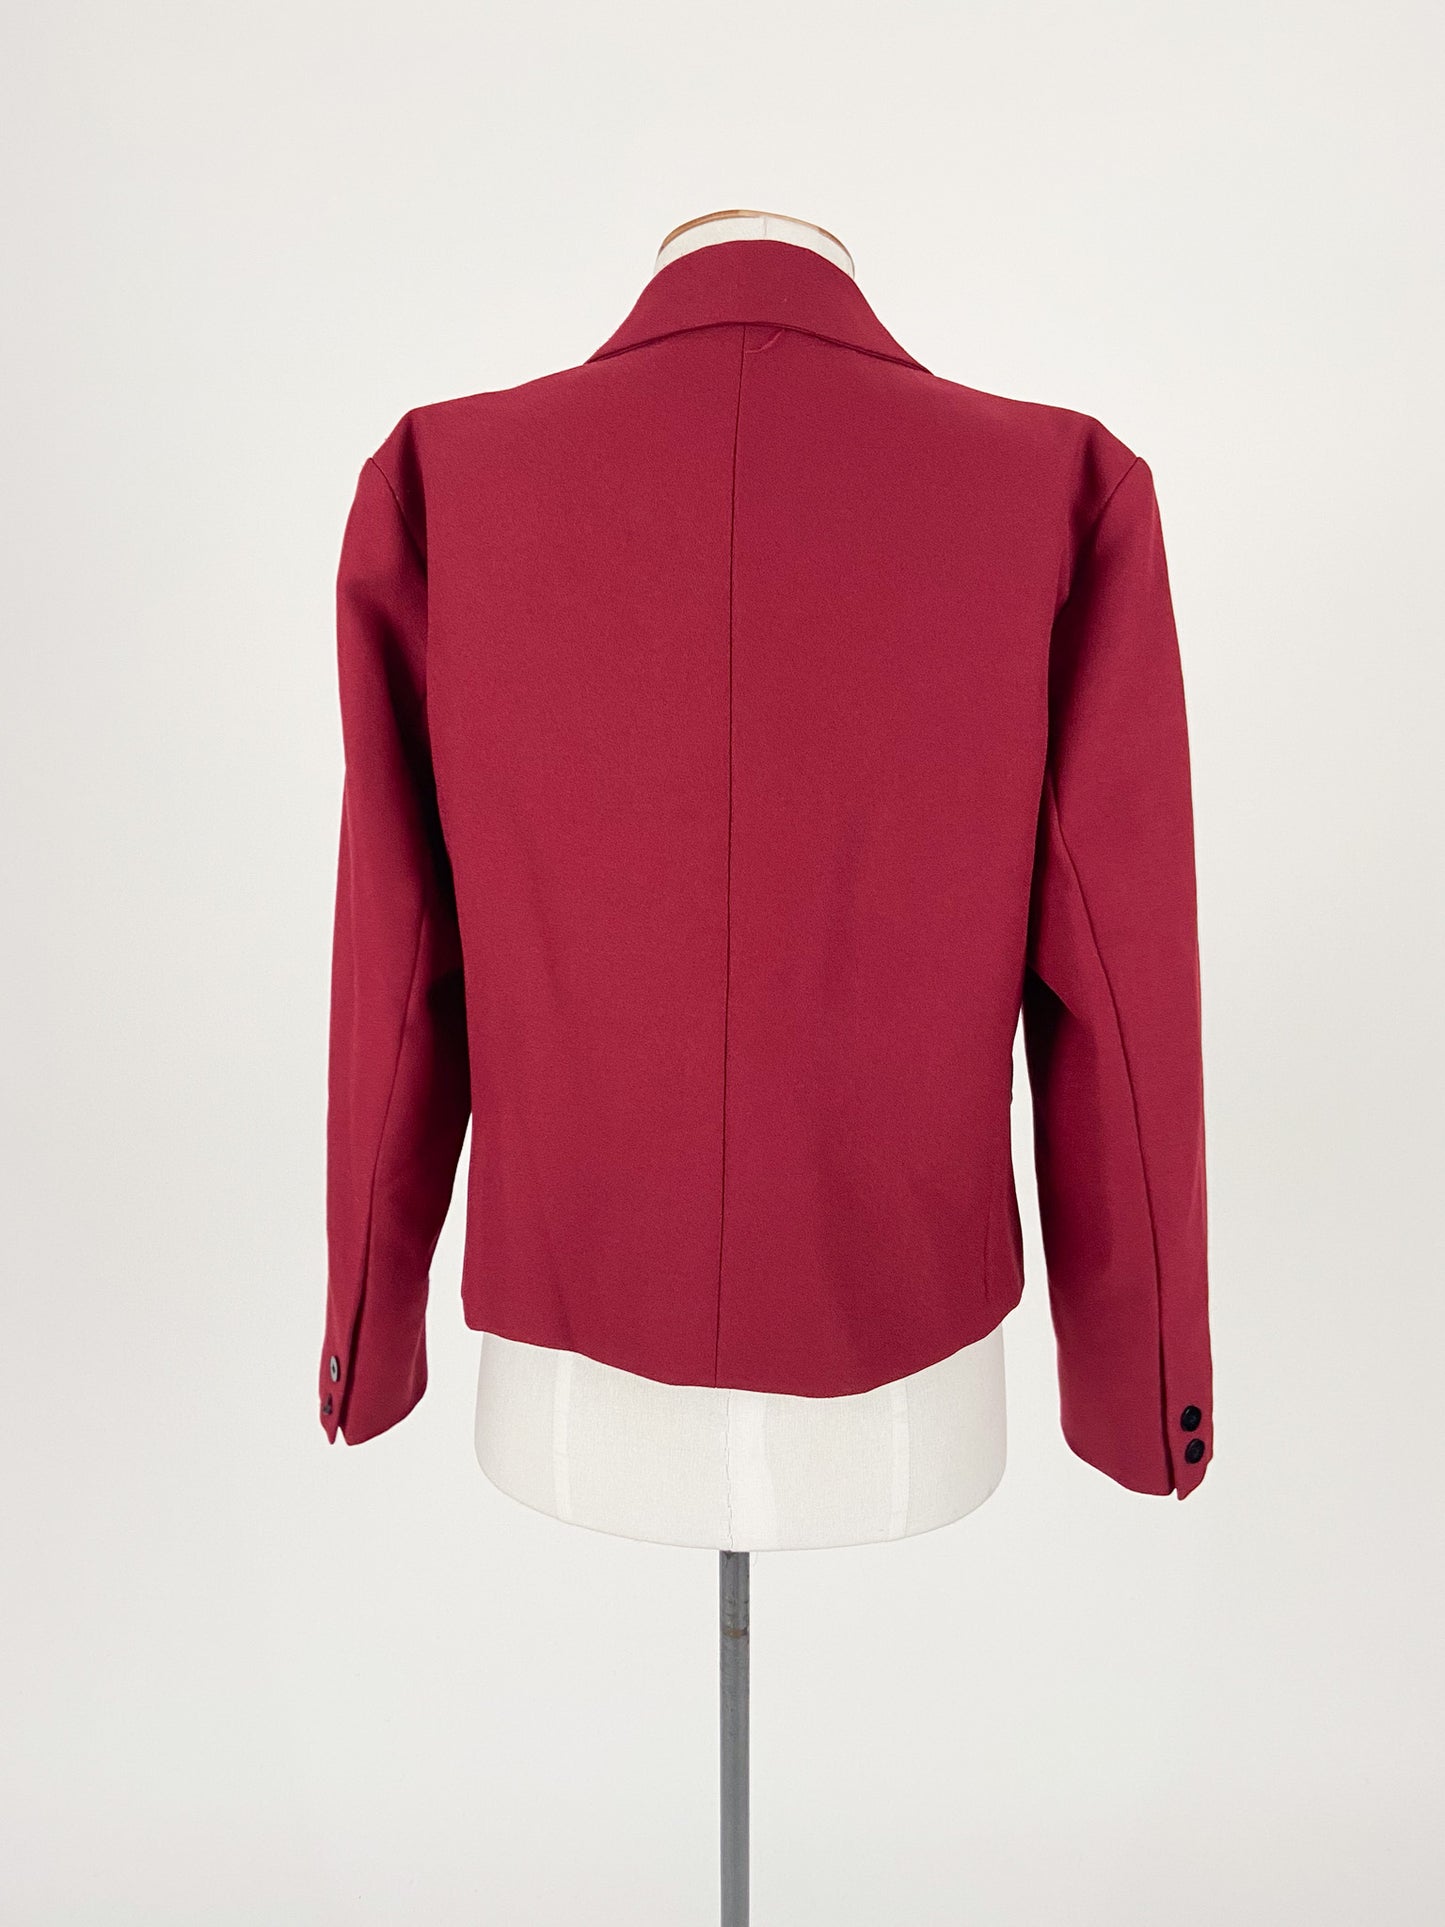 White Fox | Red Cocktail/Workwear Jacket | Size M